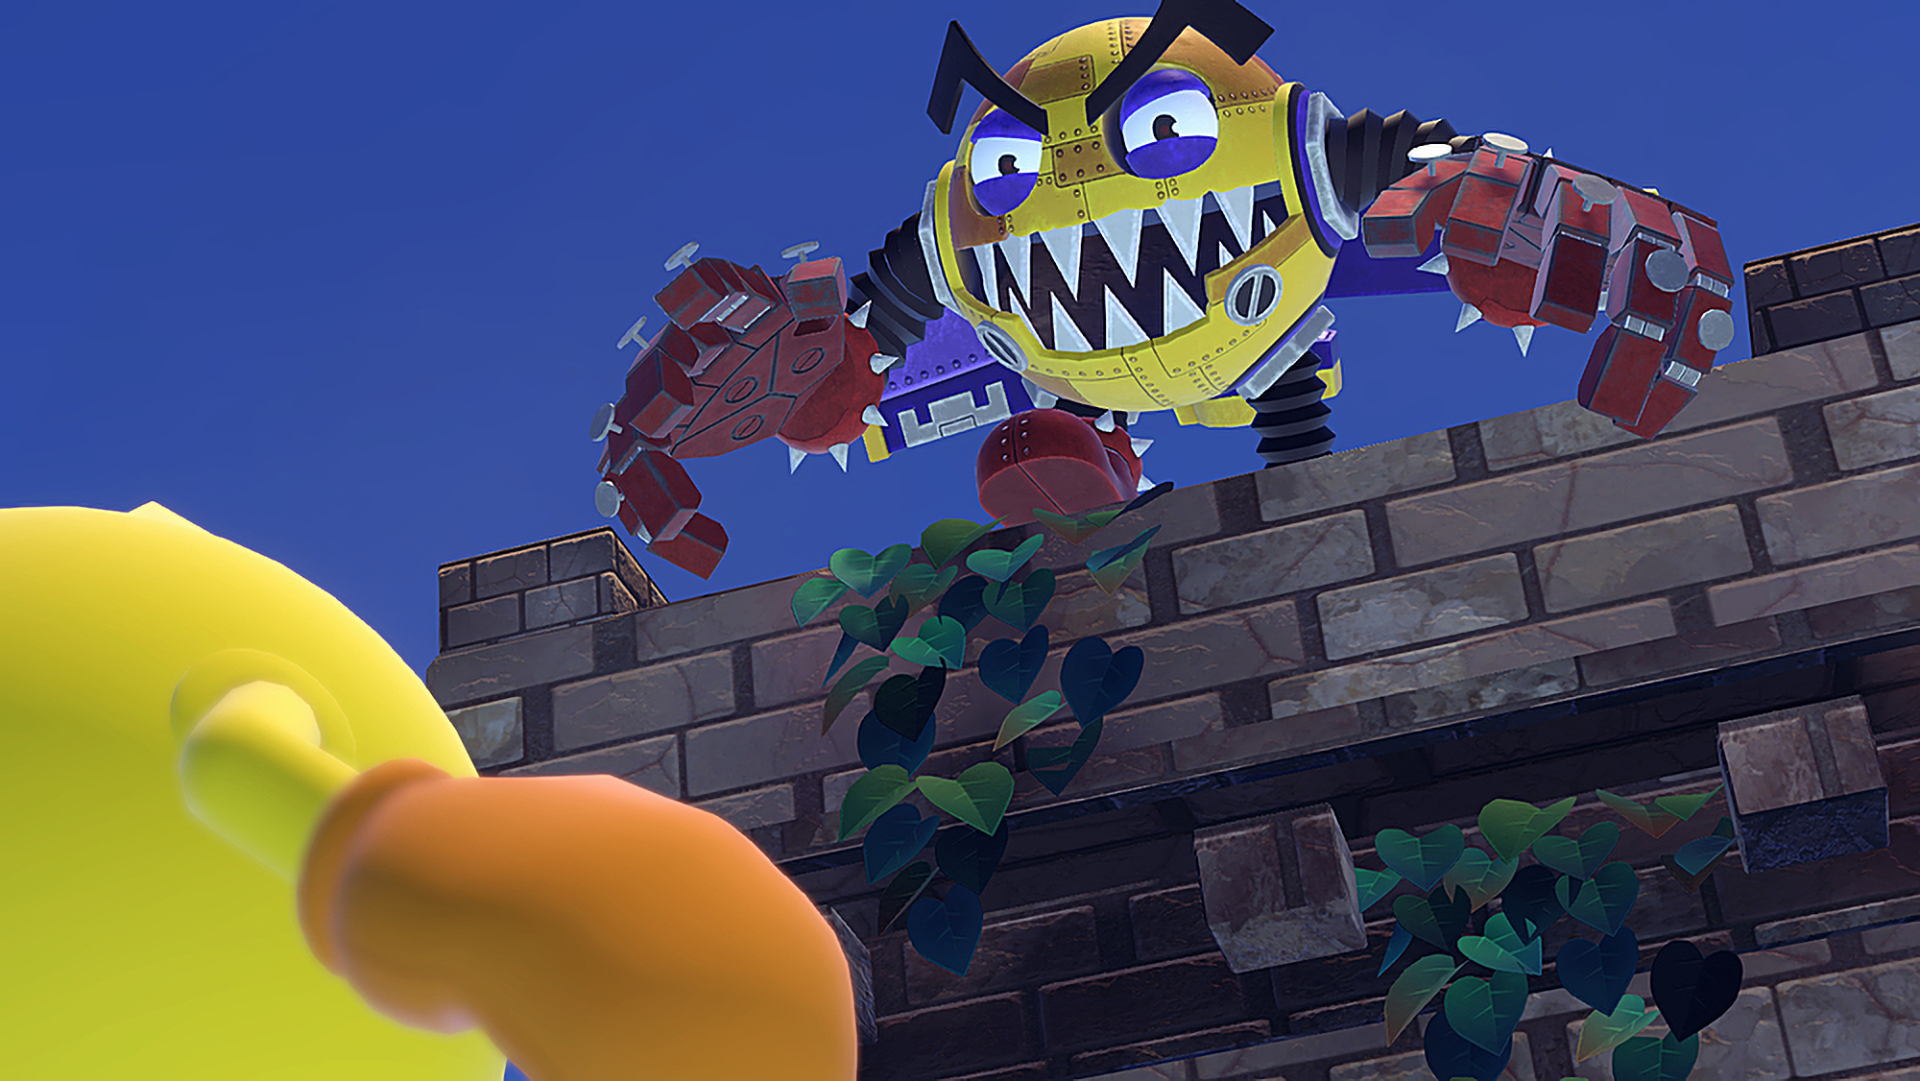 Jogo Pac-Man World Re-Pac para Nintendo Switch